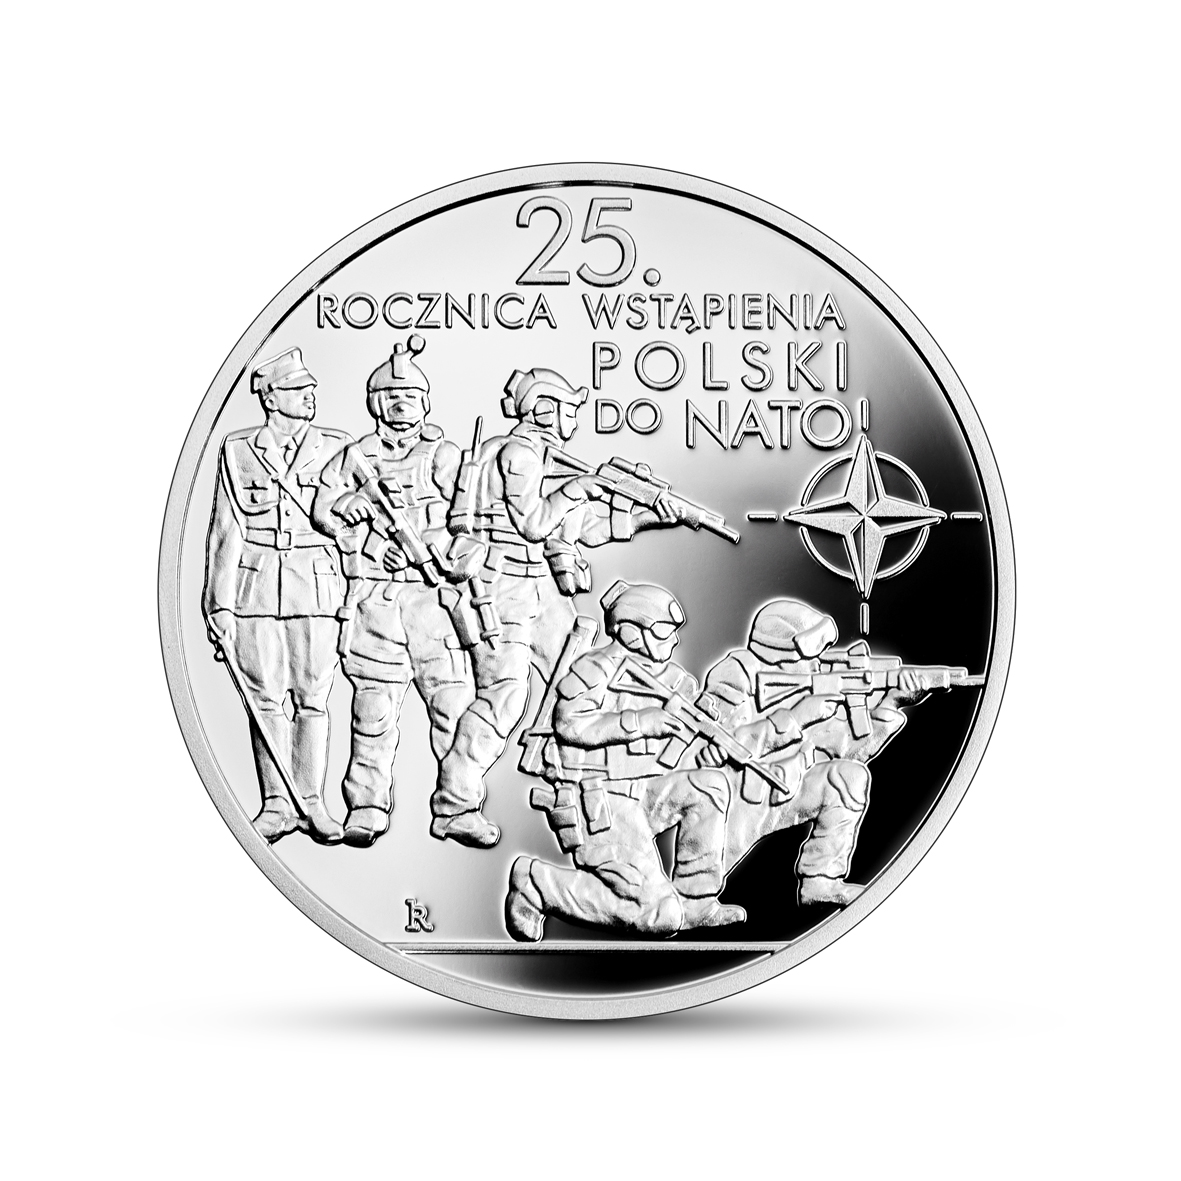 Moneta z okazji 25-lecia Polski w NATO  - NBP